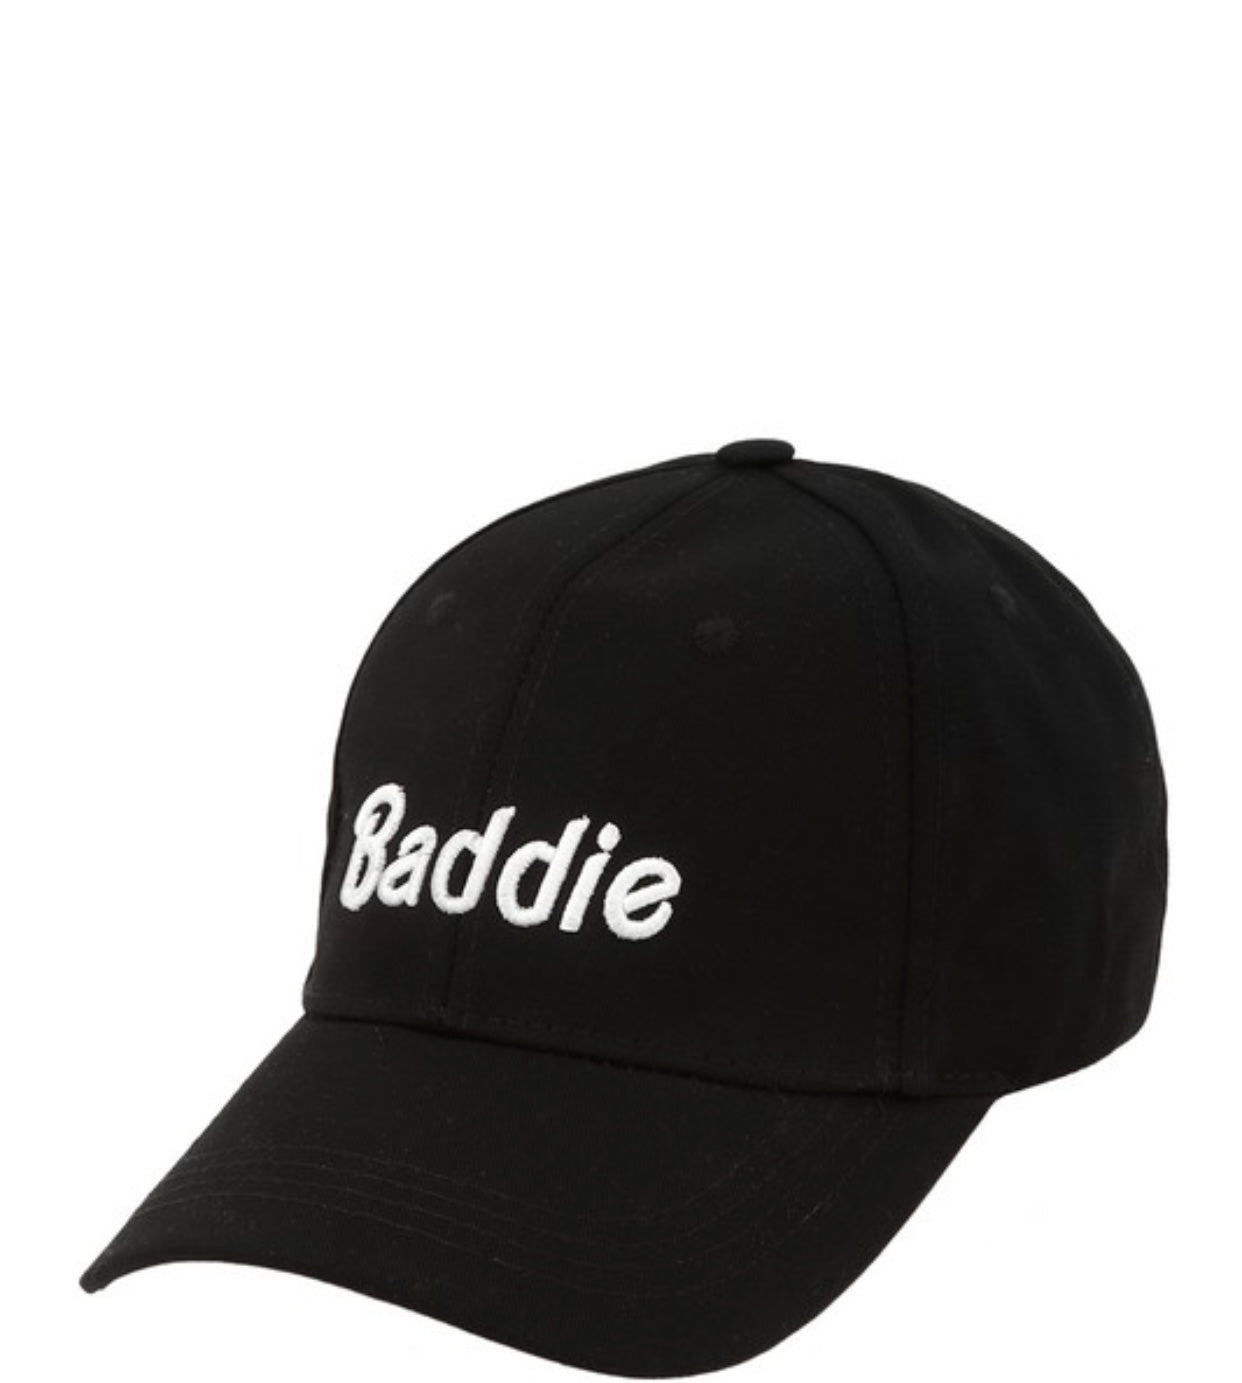 "Baddie" Baseball Cap